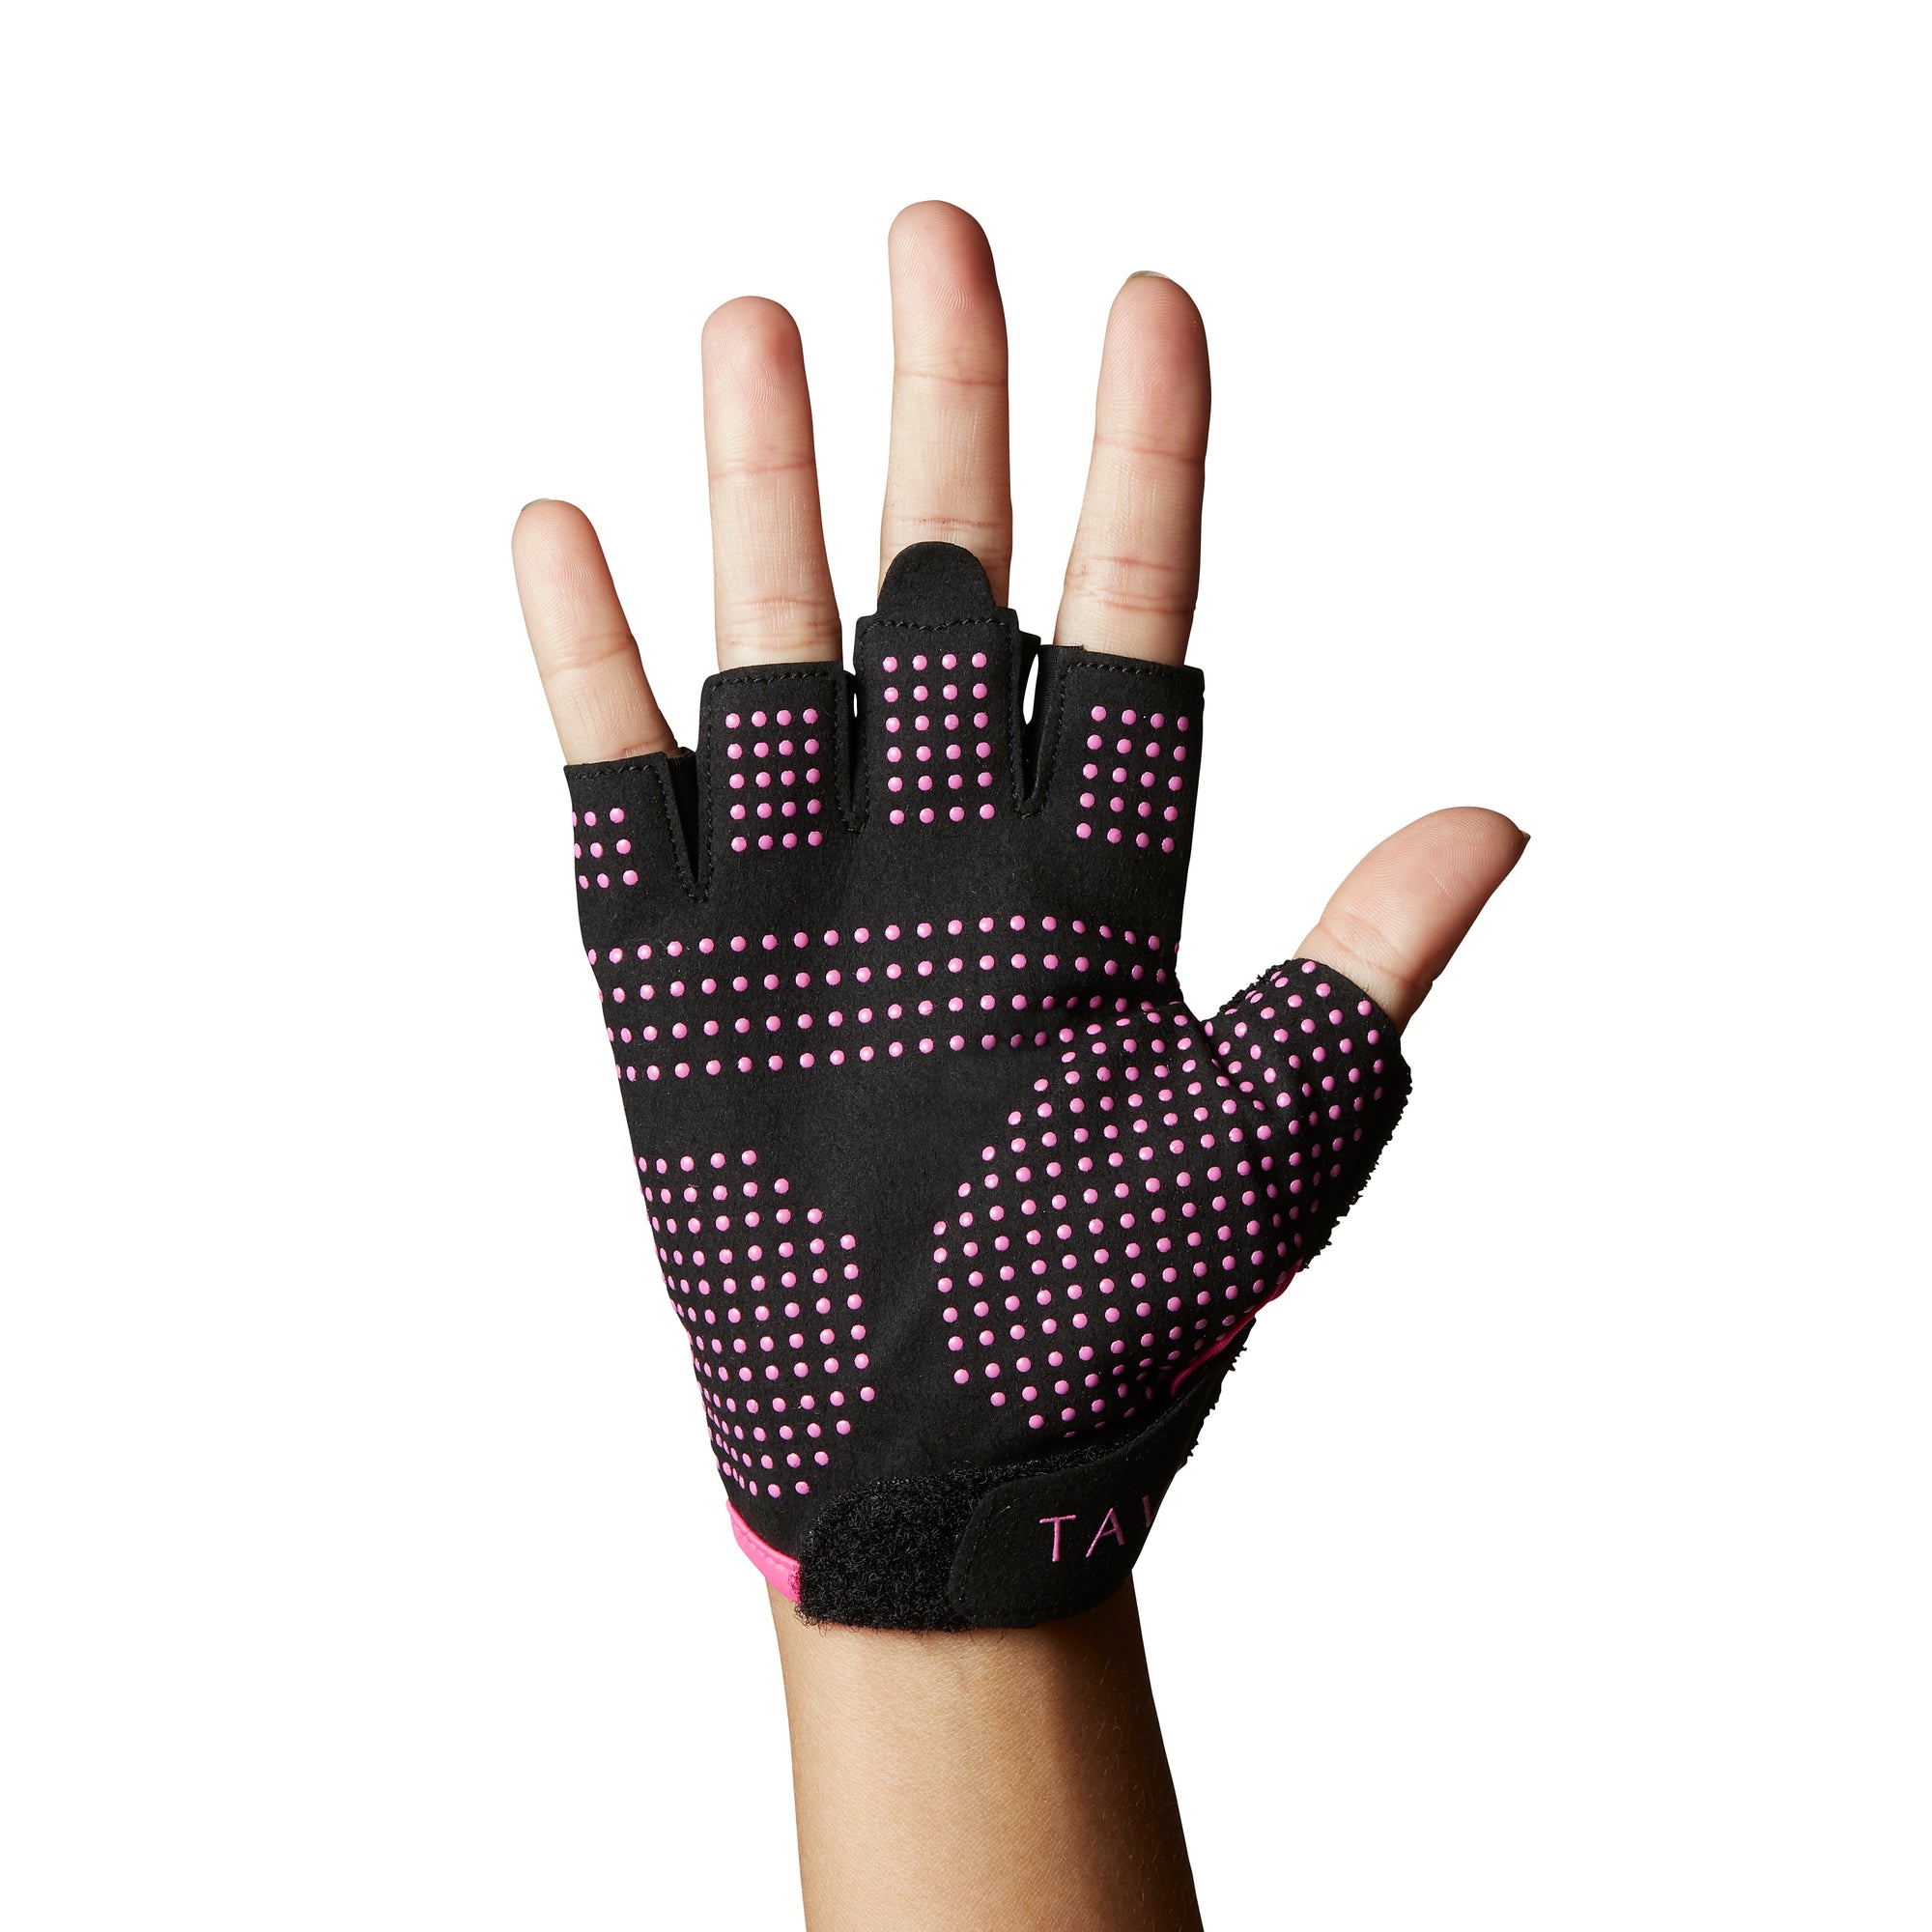 Tavi Noir - Grip Gloves - T8 Fitness - Asia Yoga, Pilates, Rehab